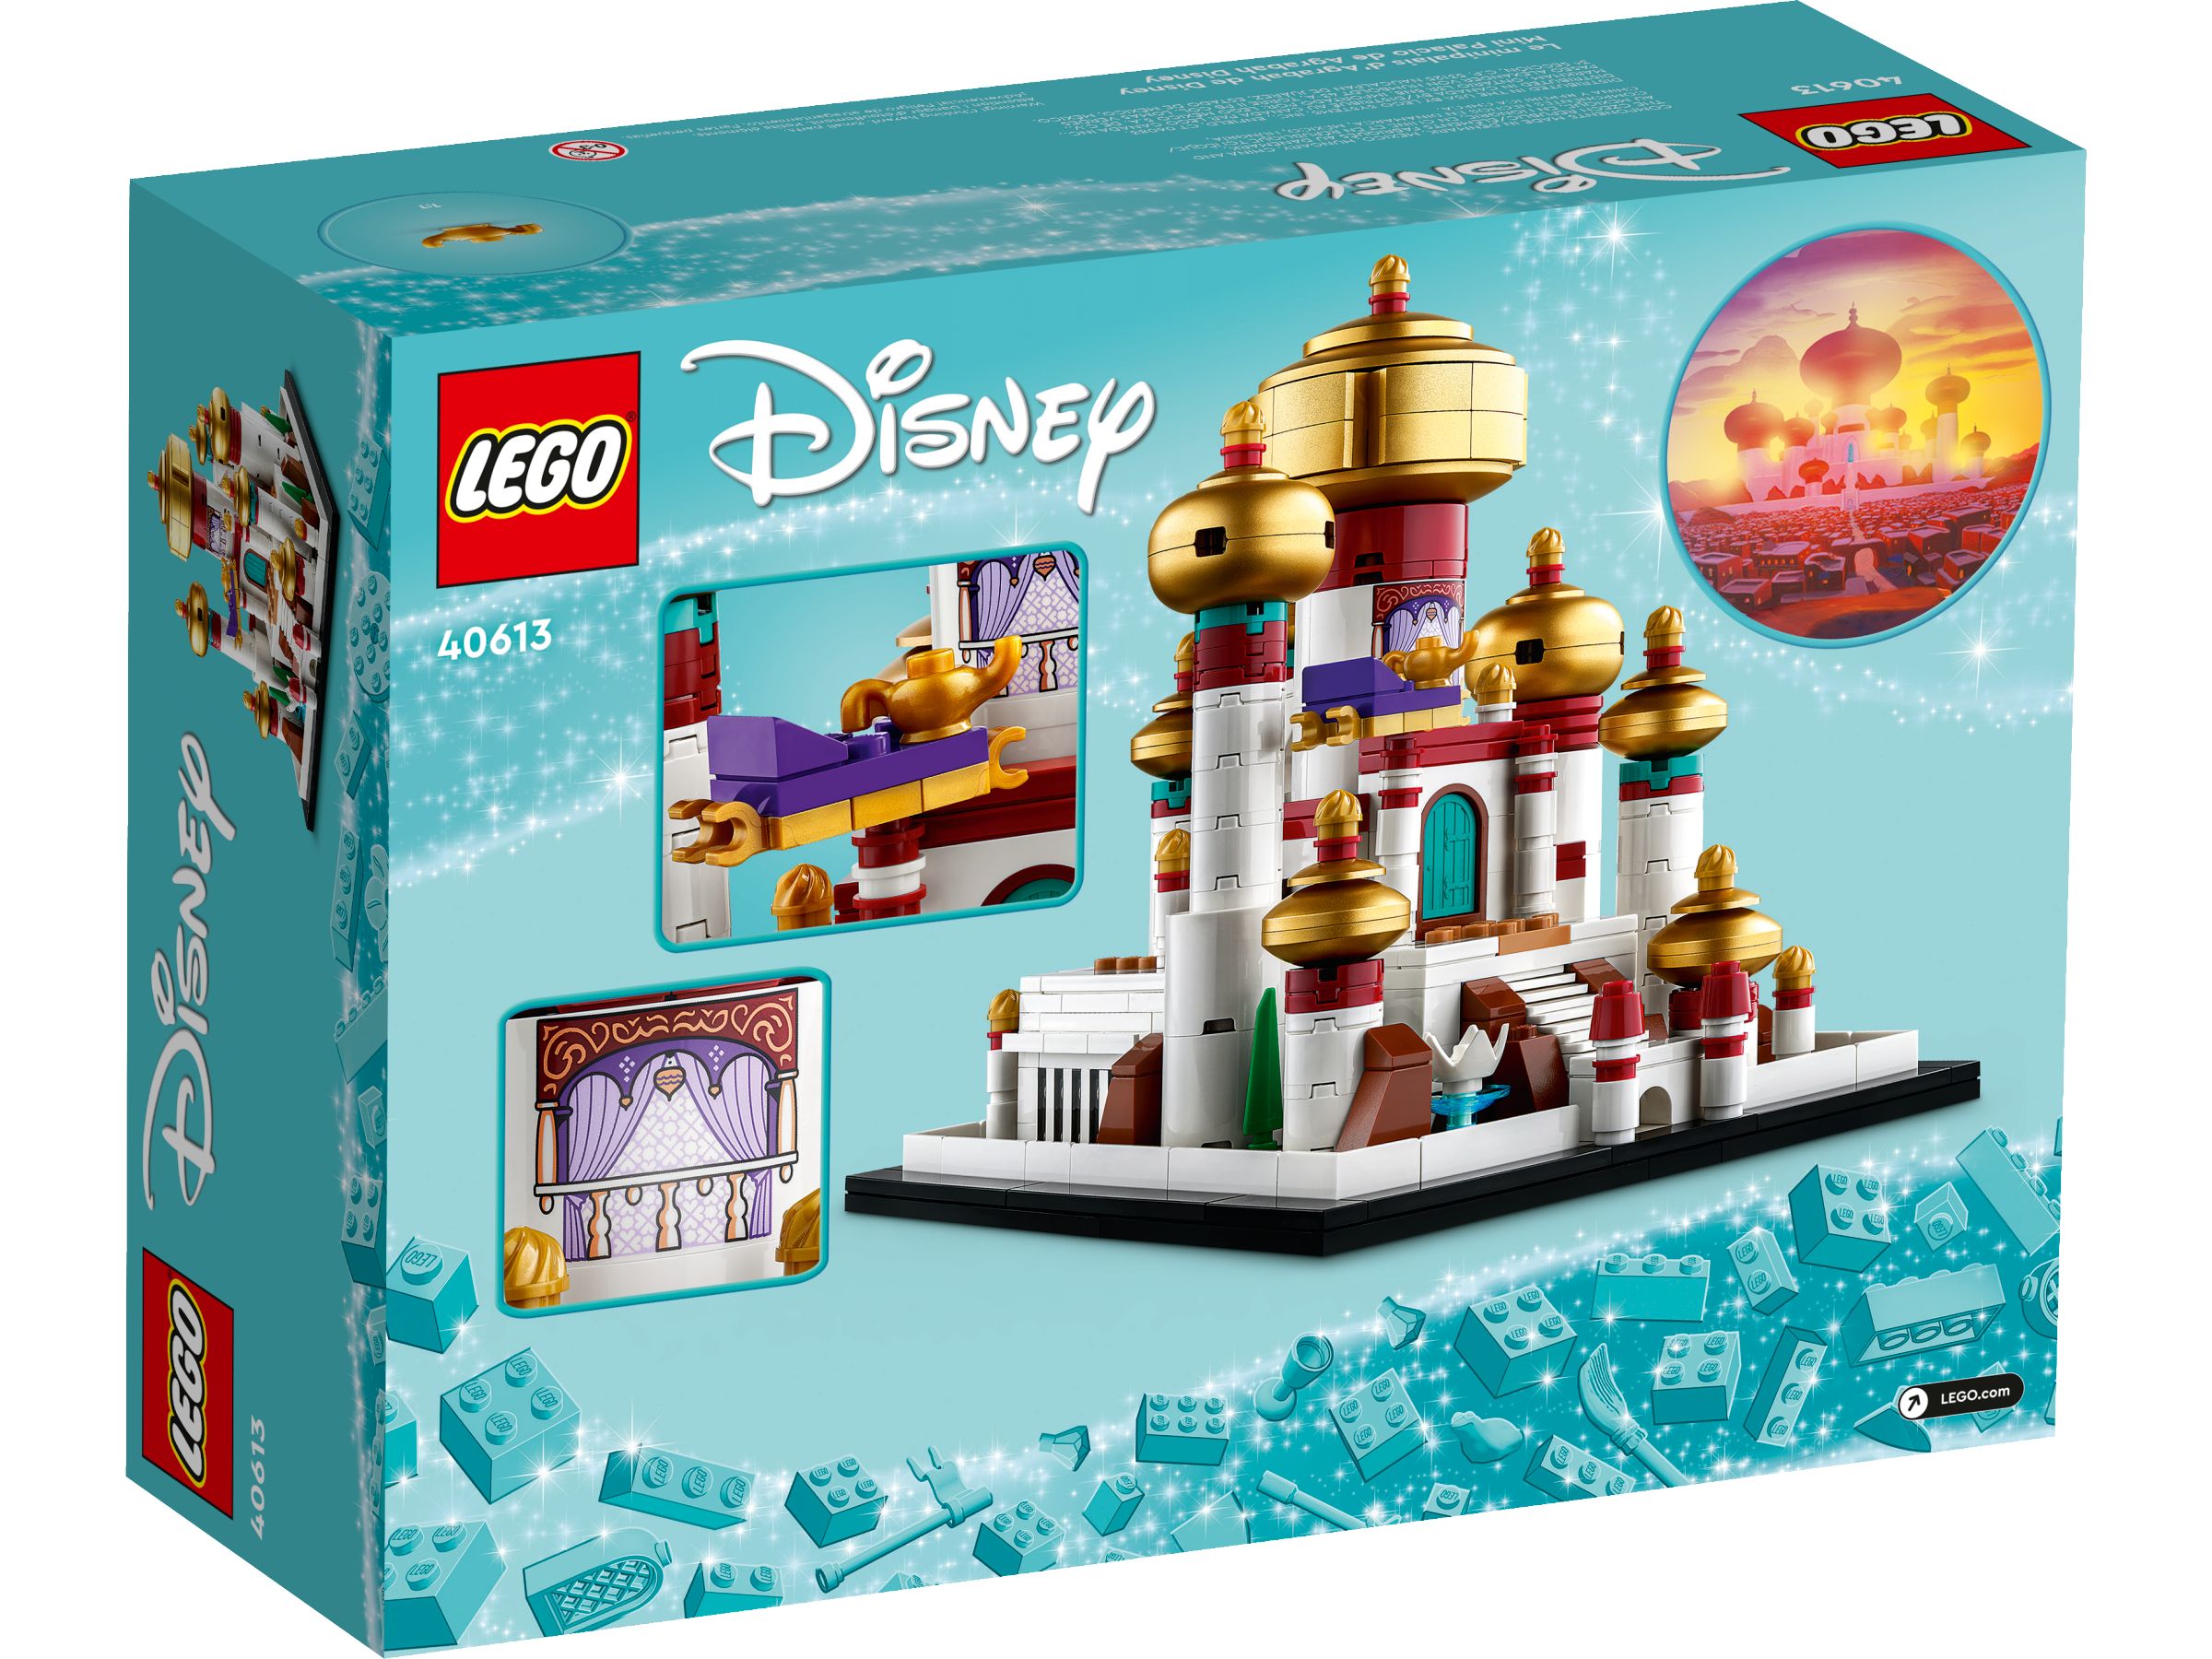 LEGO Miscellaneous 40613 Mini Disney Palace of Agrabah LEGO_40613_alt2.jpg